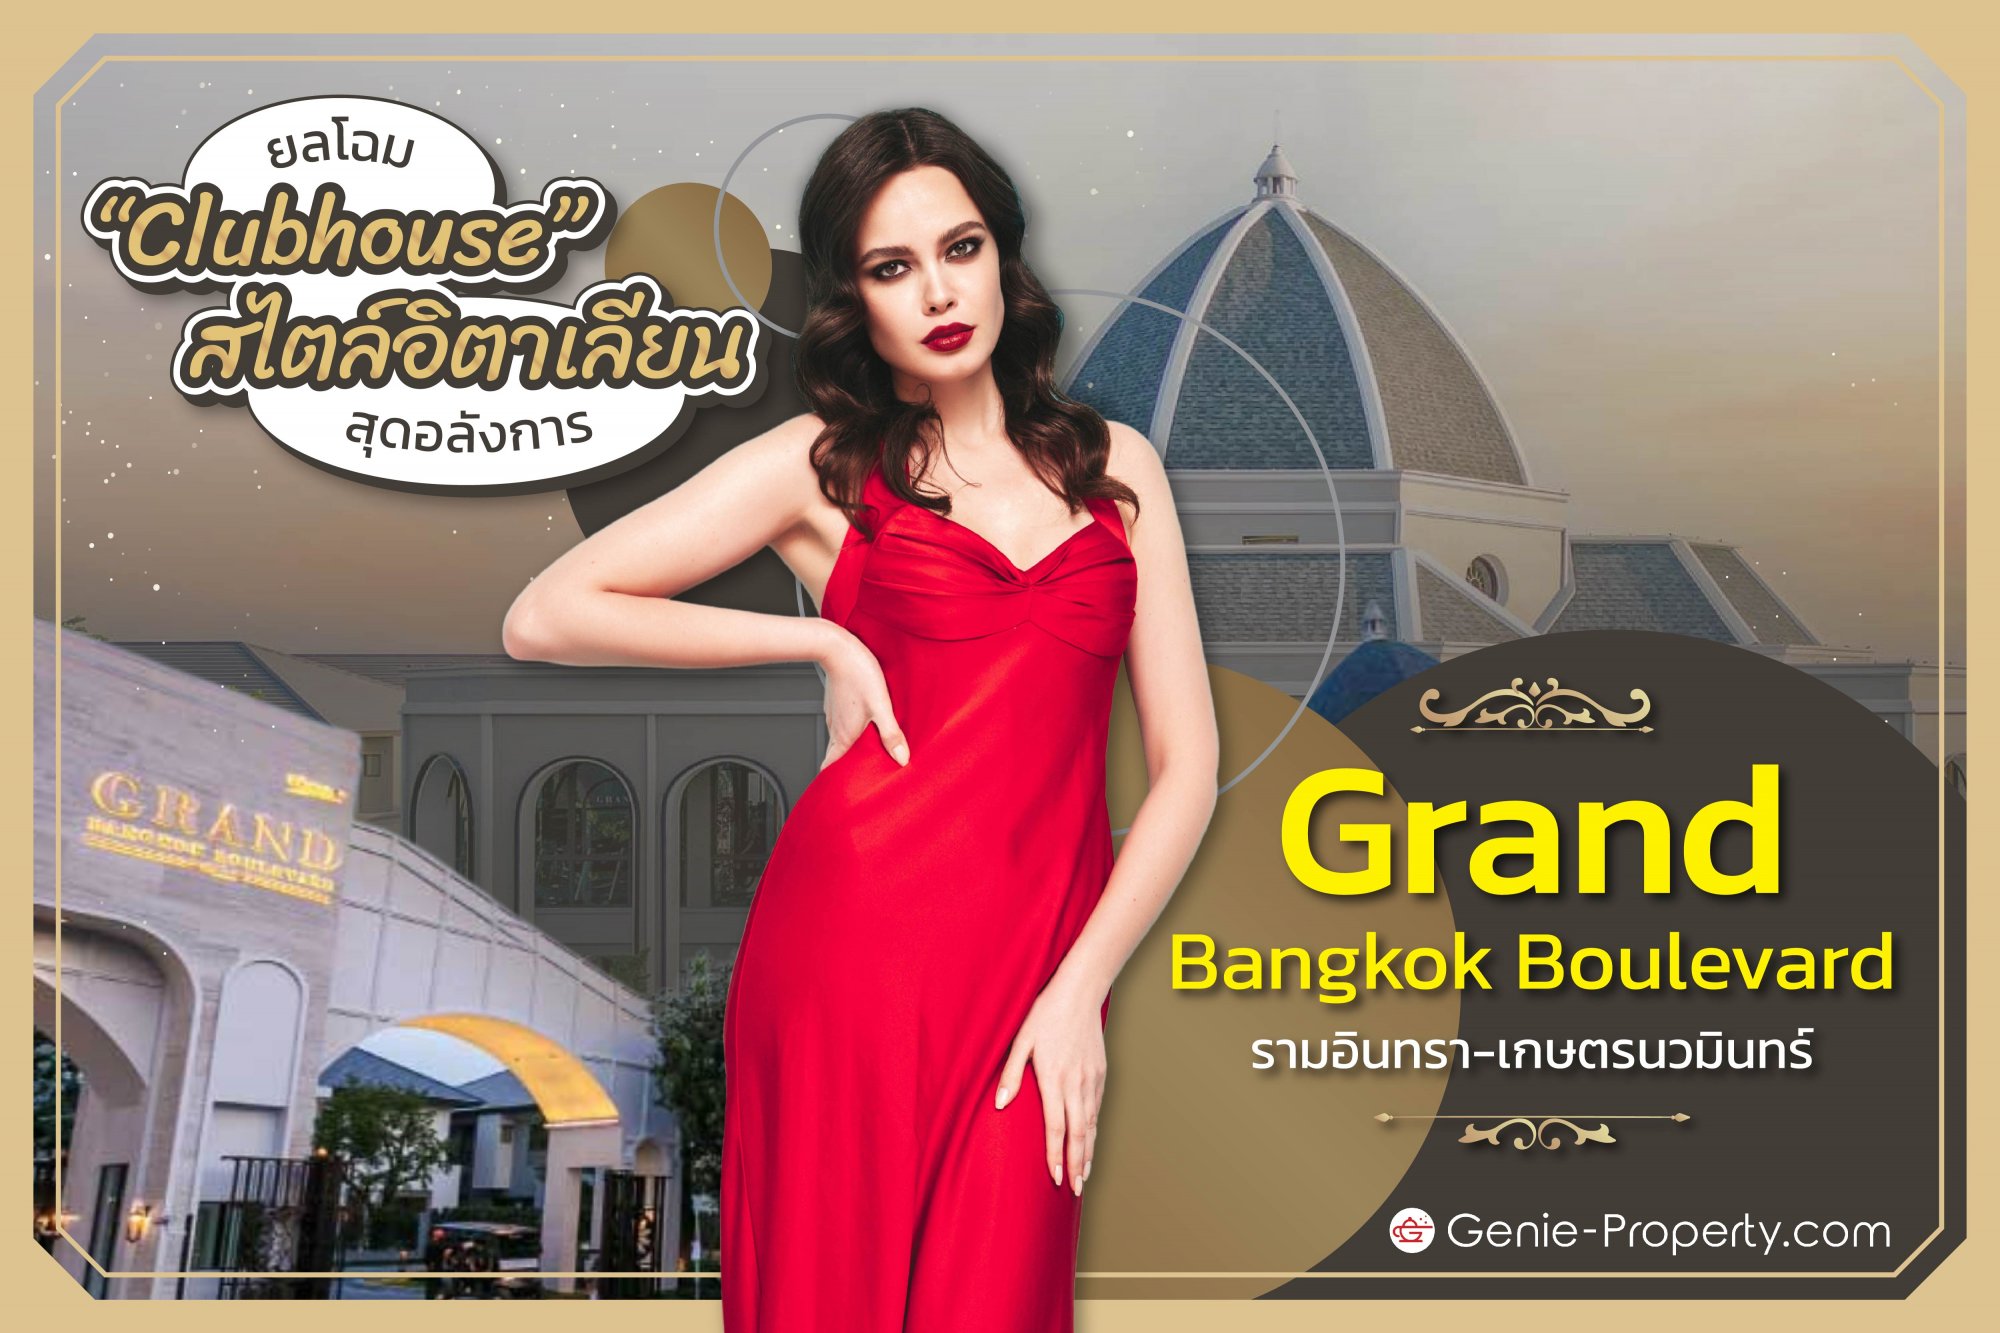 image for ยลโฉม “Clubhouse” สไตล์อิตาเลี่ยน สุดอลังการ 	จาก Grand Bangkok Boulevard รามอินทรา-เกษตรนวมินทร์